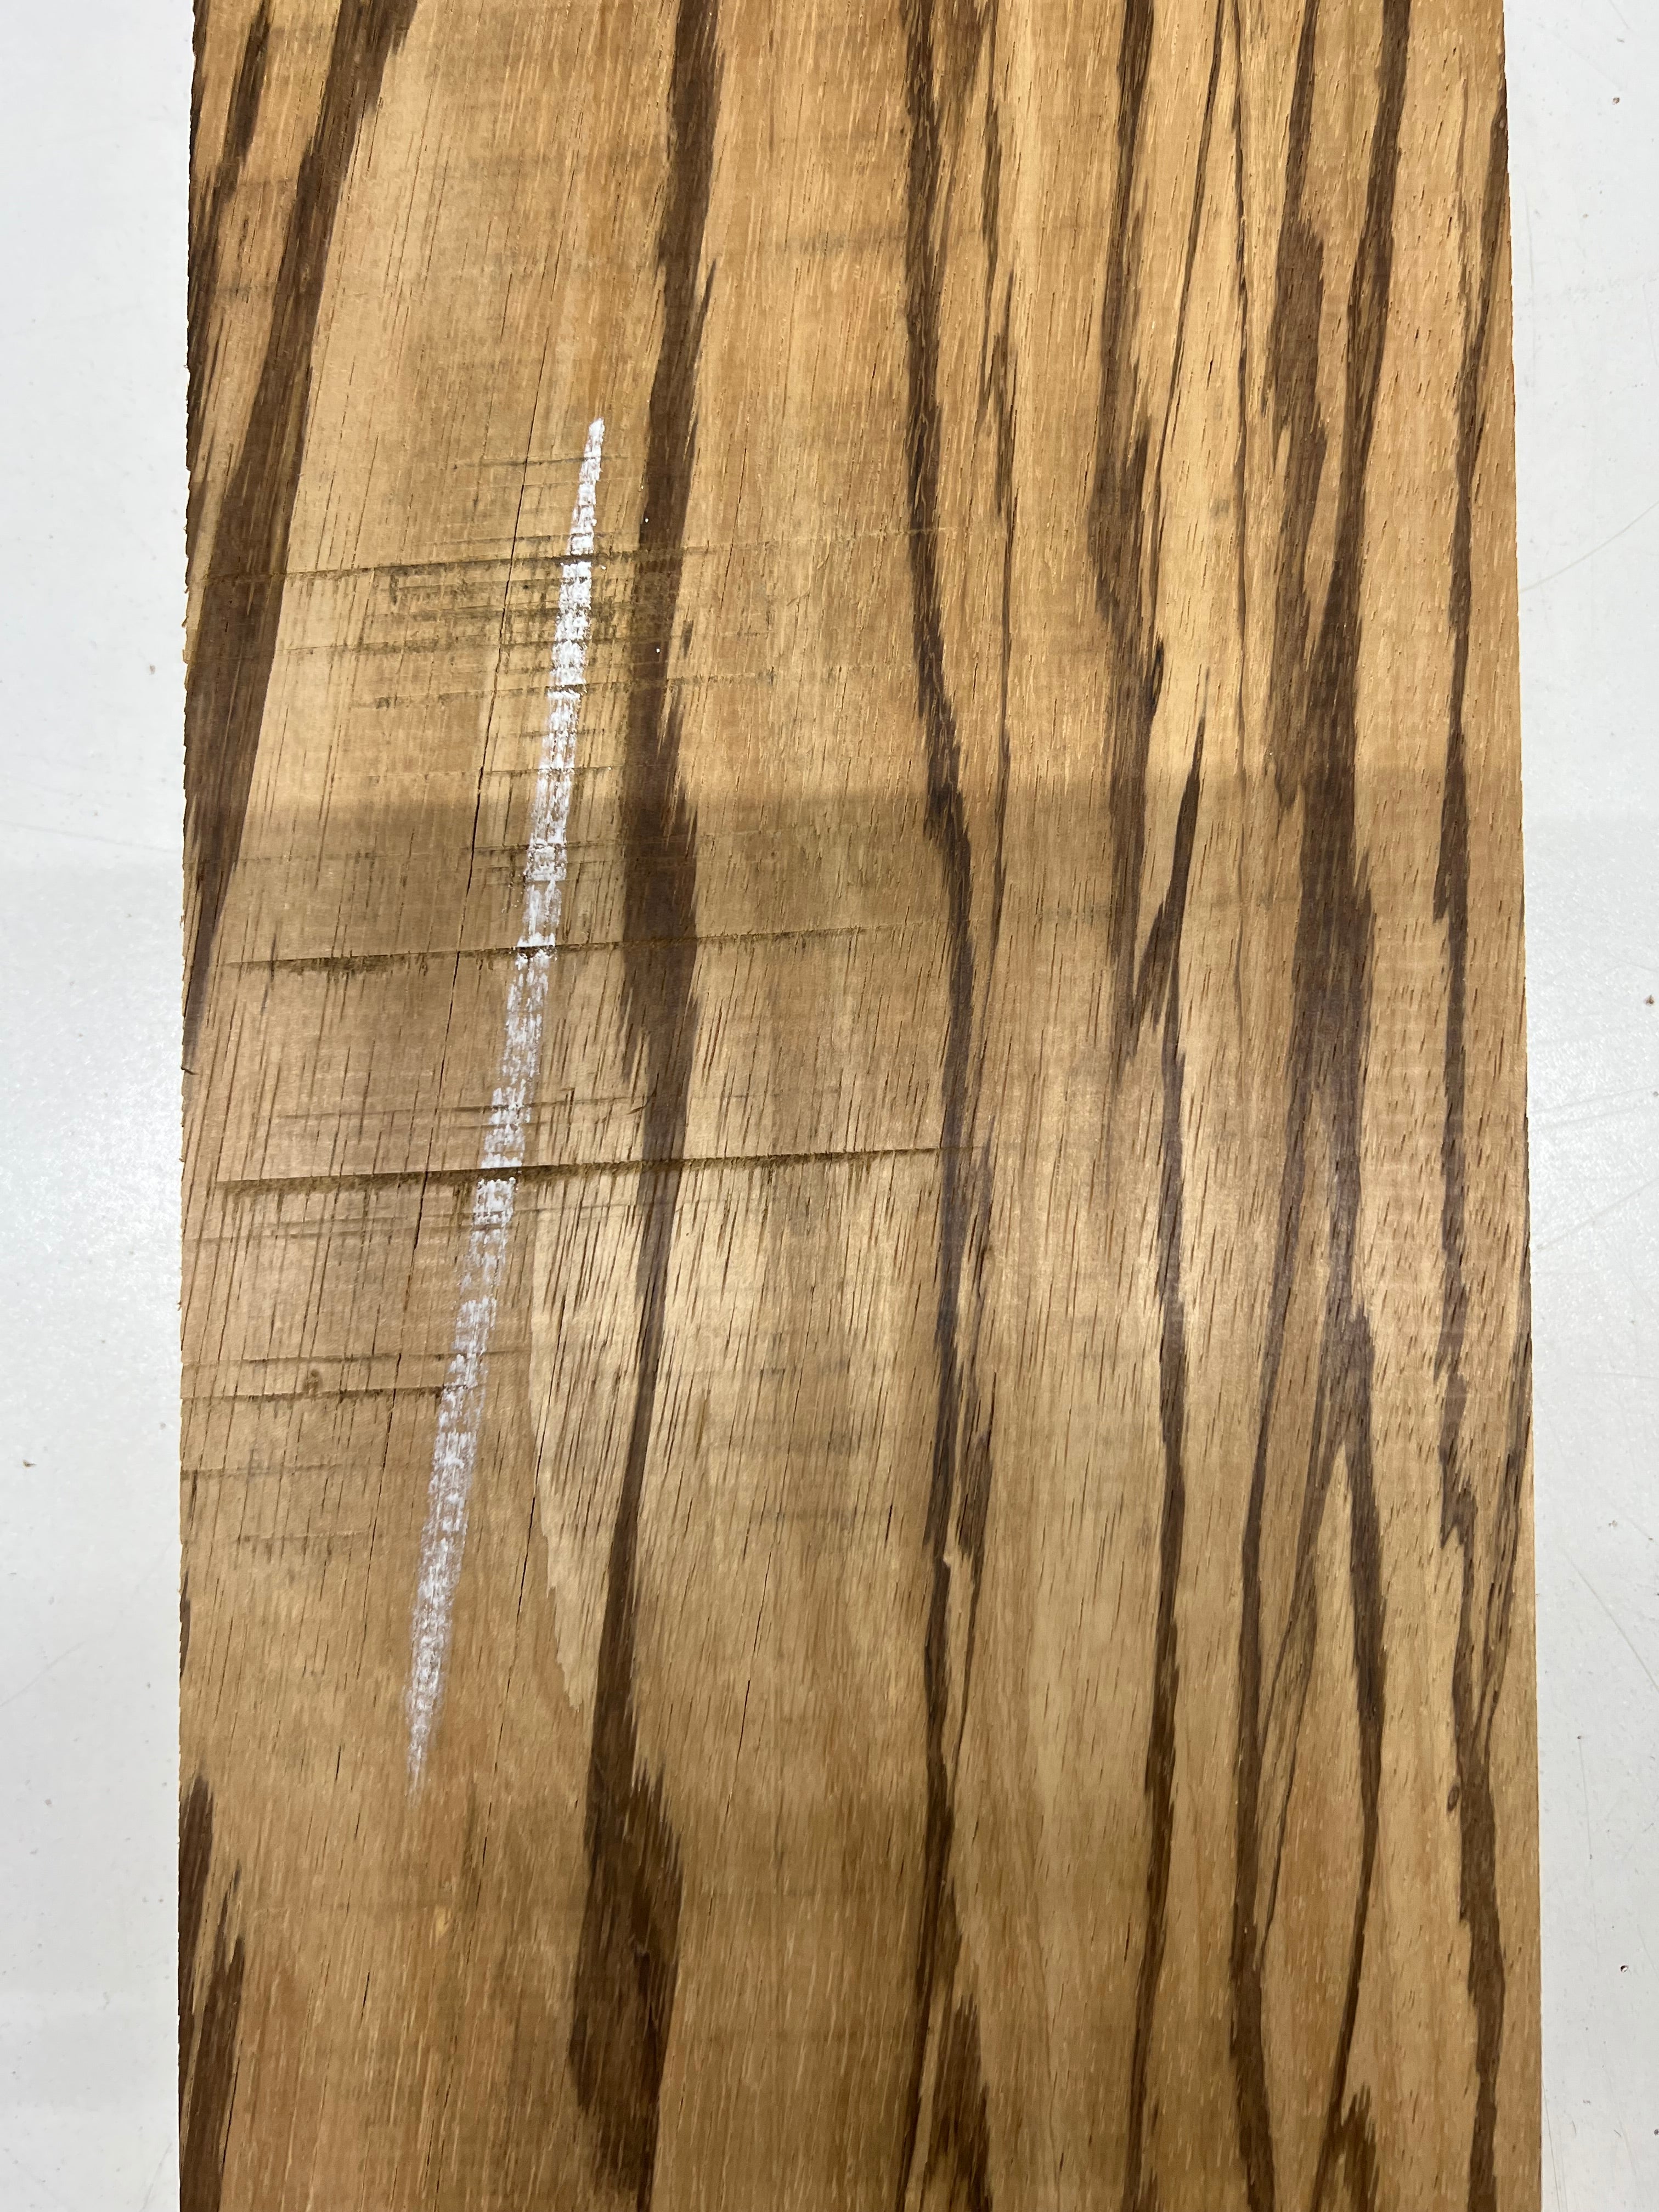 Zebrawood Lumber Board Wood Blank 16&quot;x 6-1/4&quot;x 1-7/8&quot; 